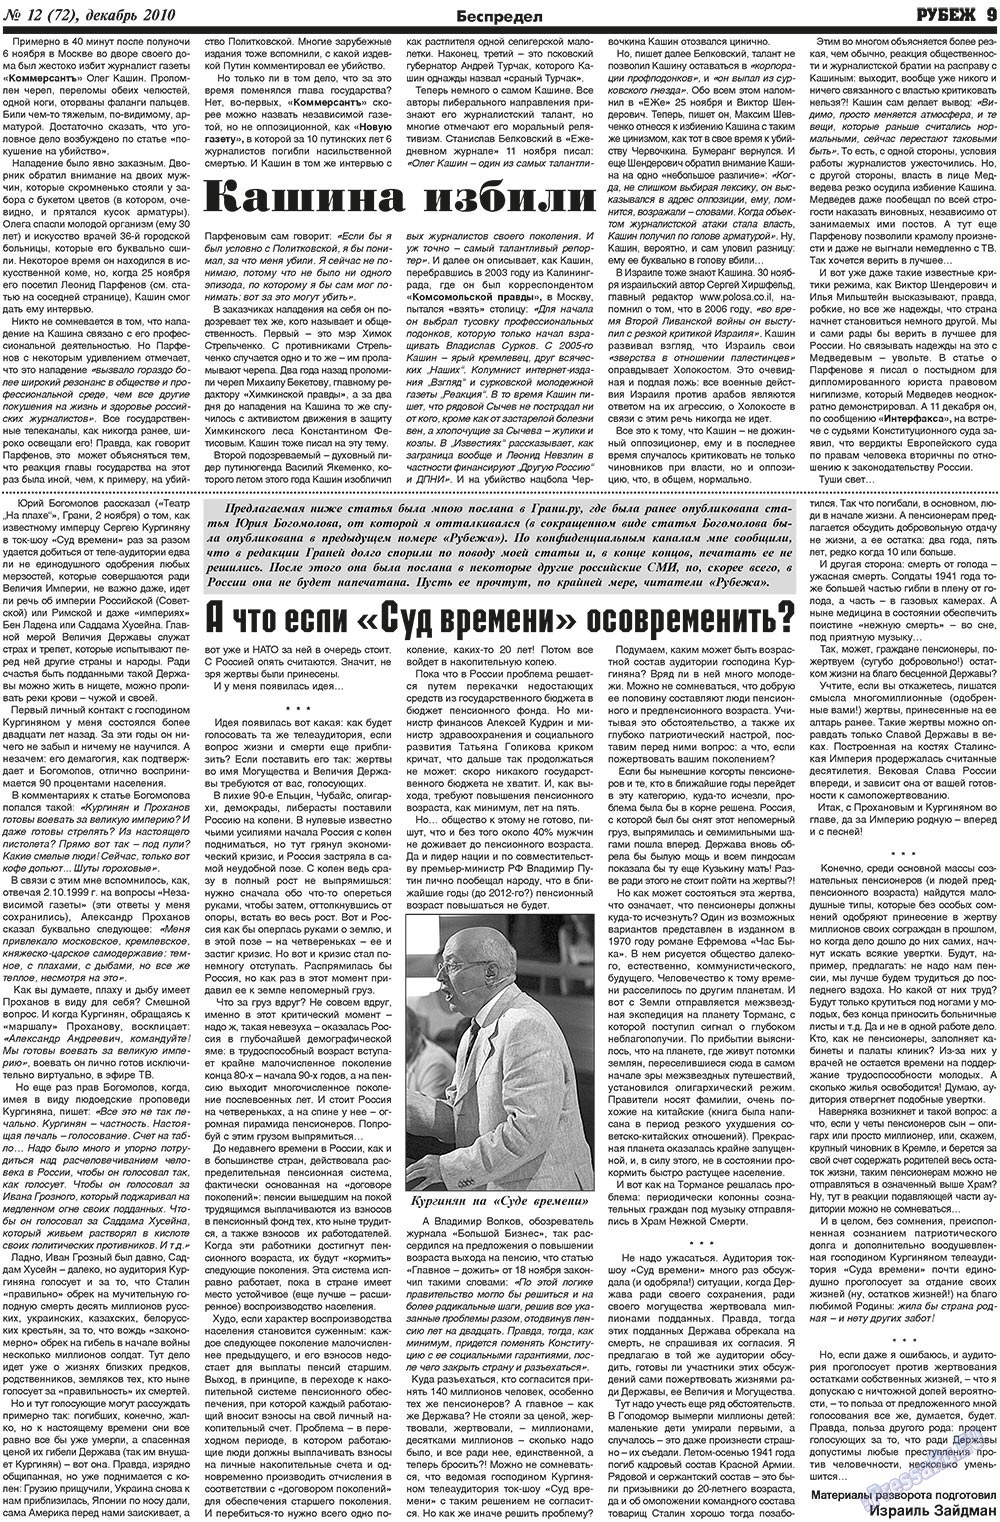 Рубеж, газета. 2010 №12 стр.9